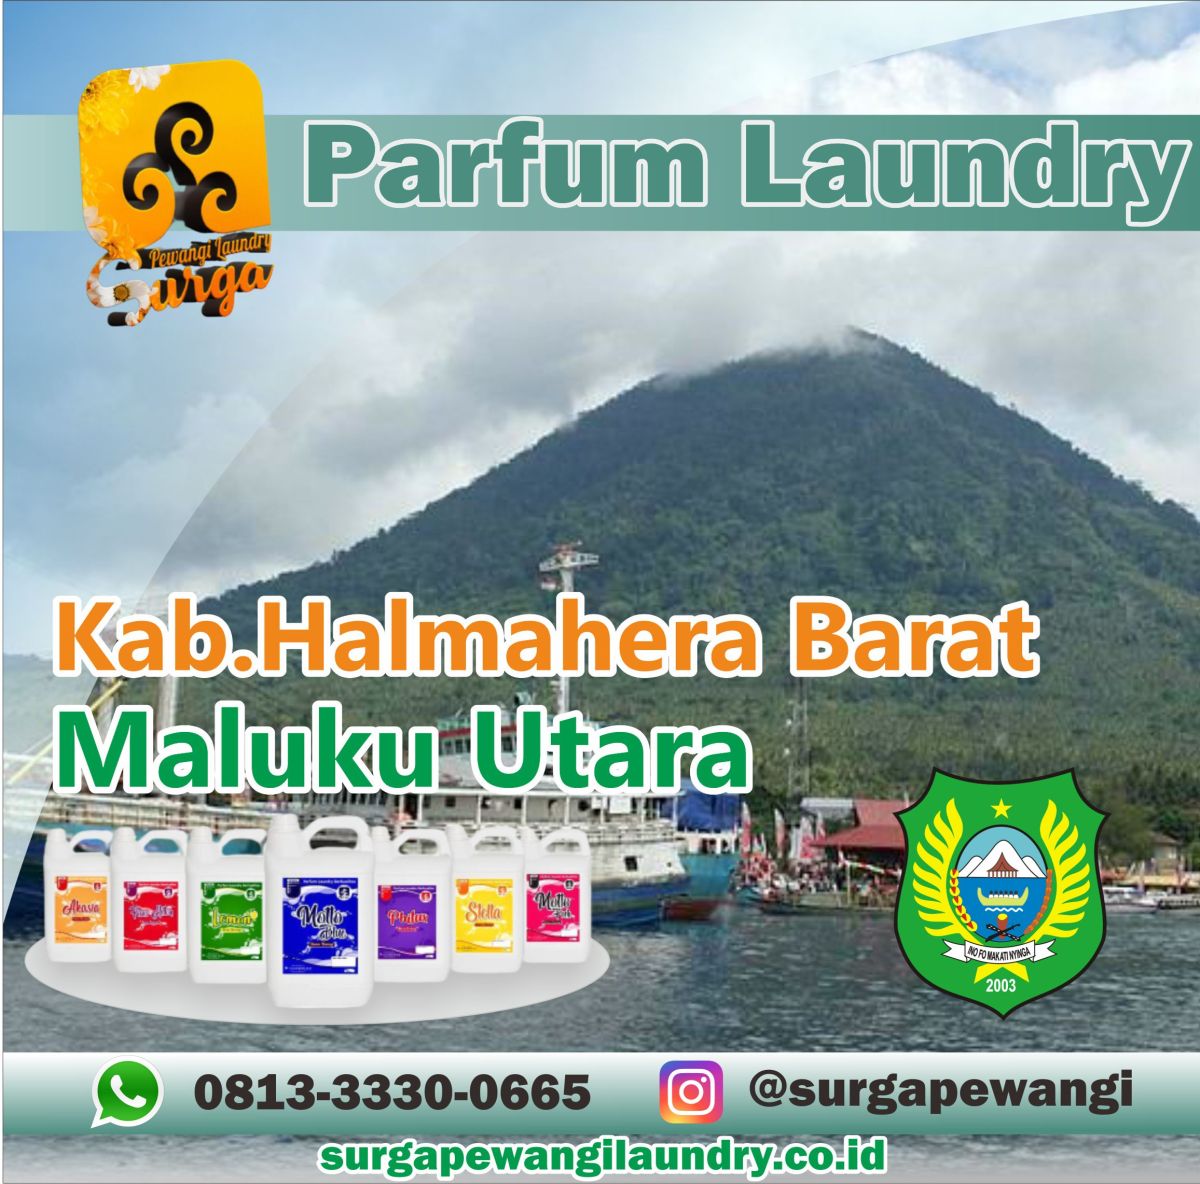 Parfum Laundry Kabupaten Halmahera Barat, Maluku Utara